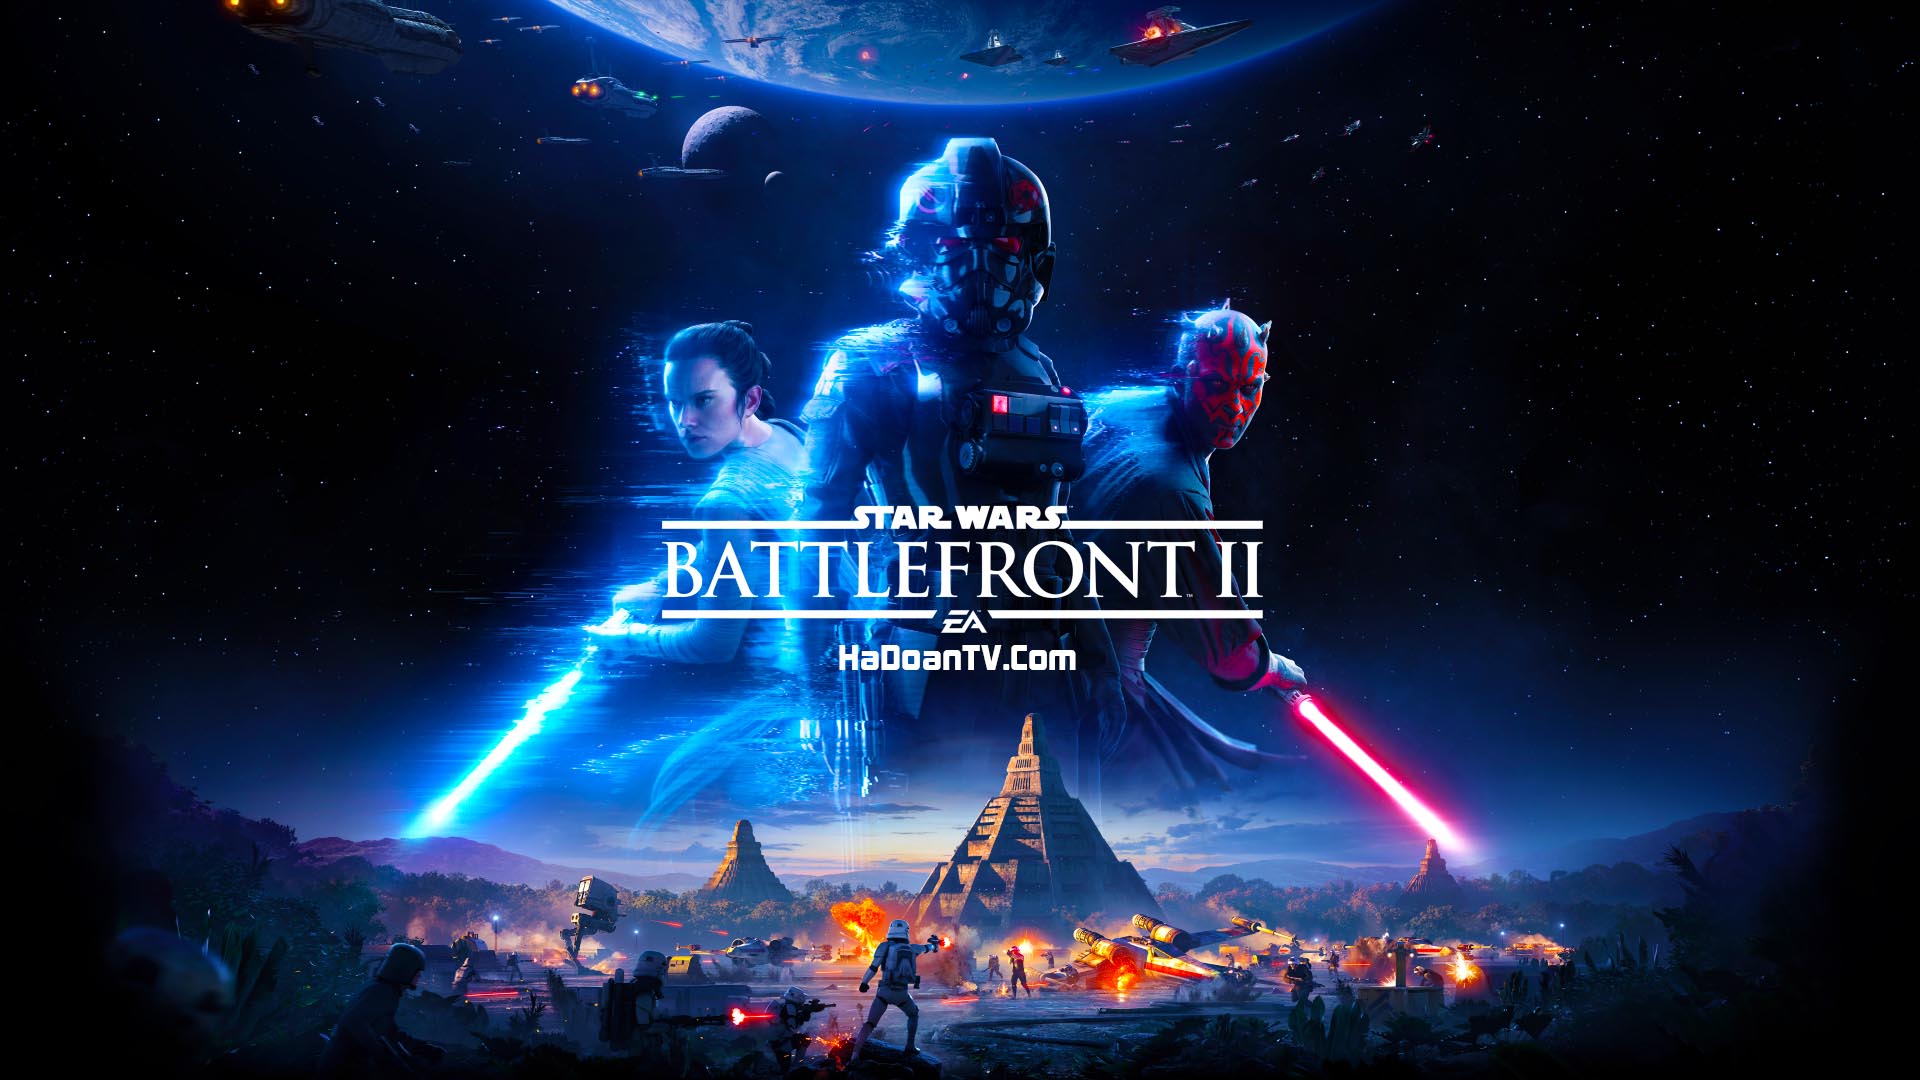 free download star wars battlefront ii celebration edition